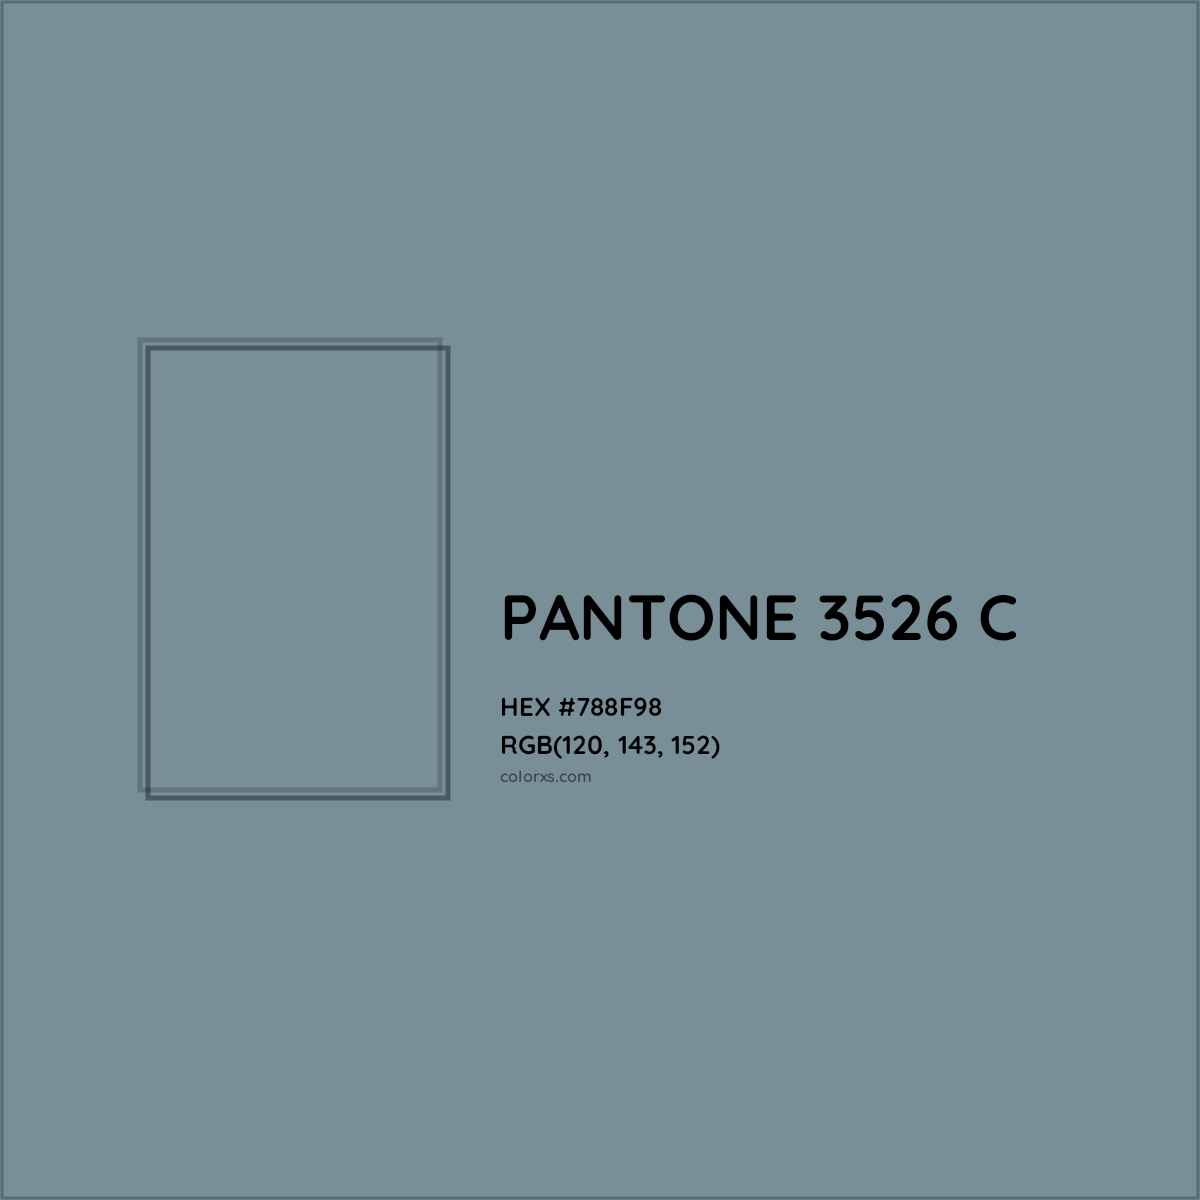 HEX #788F98 PANTONE 3526 C CMS Pantone PMS - Color Code